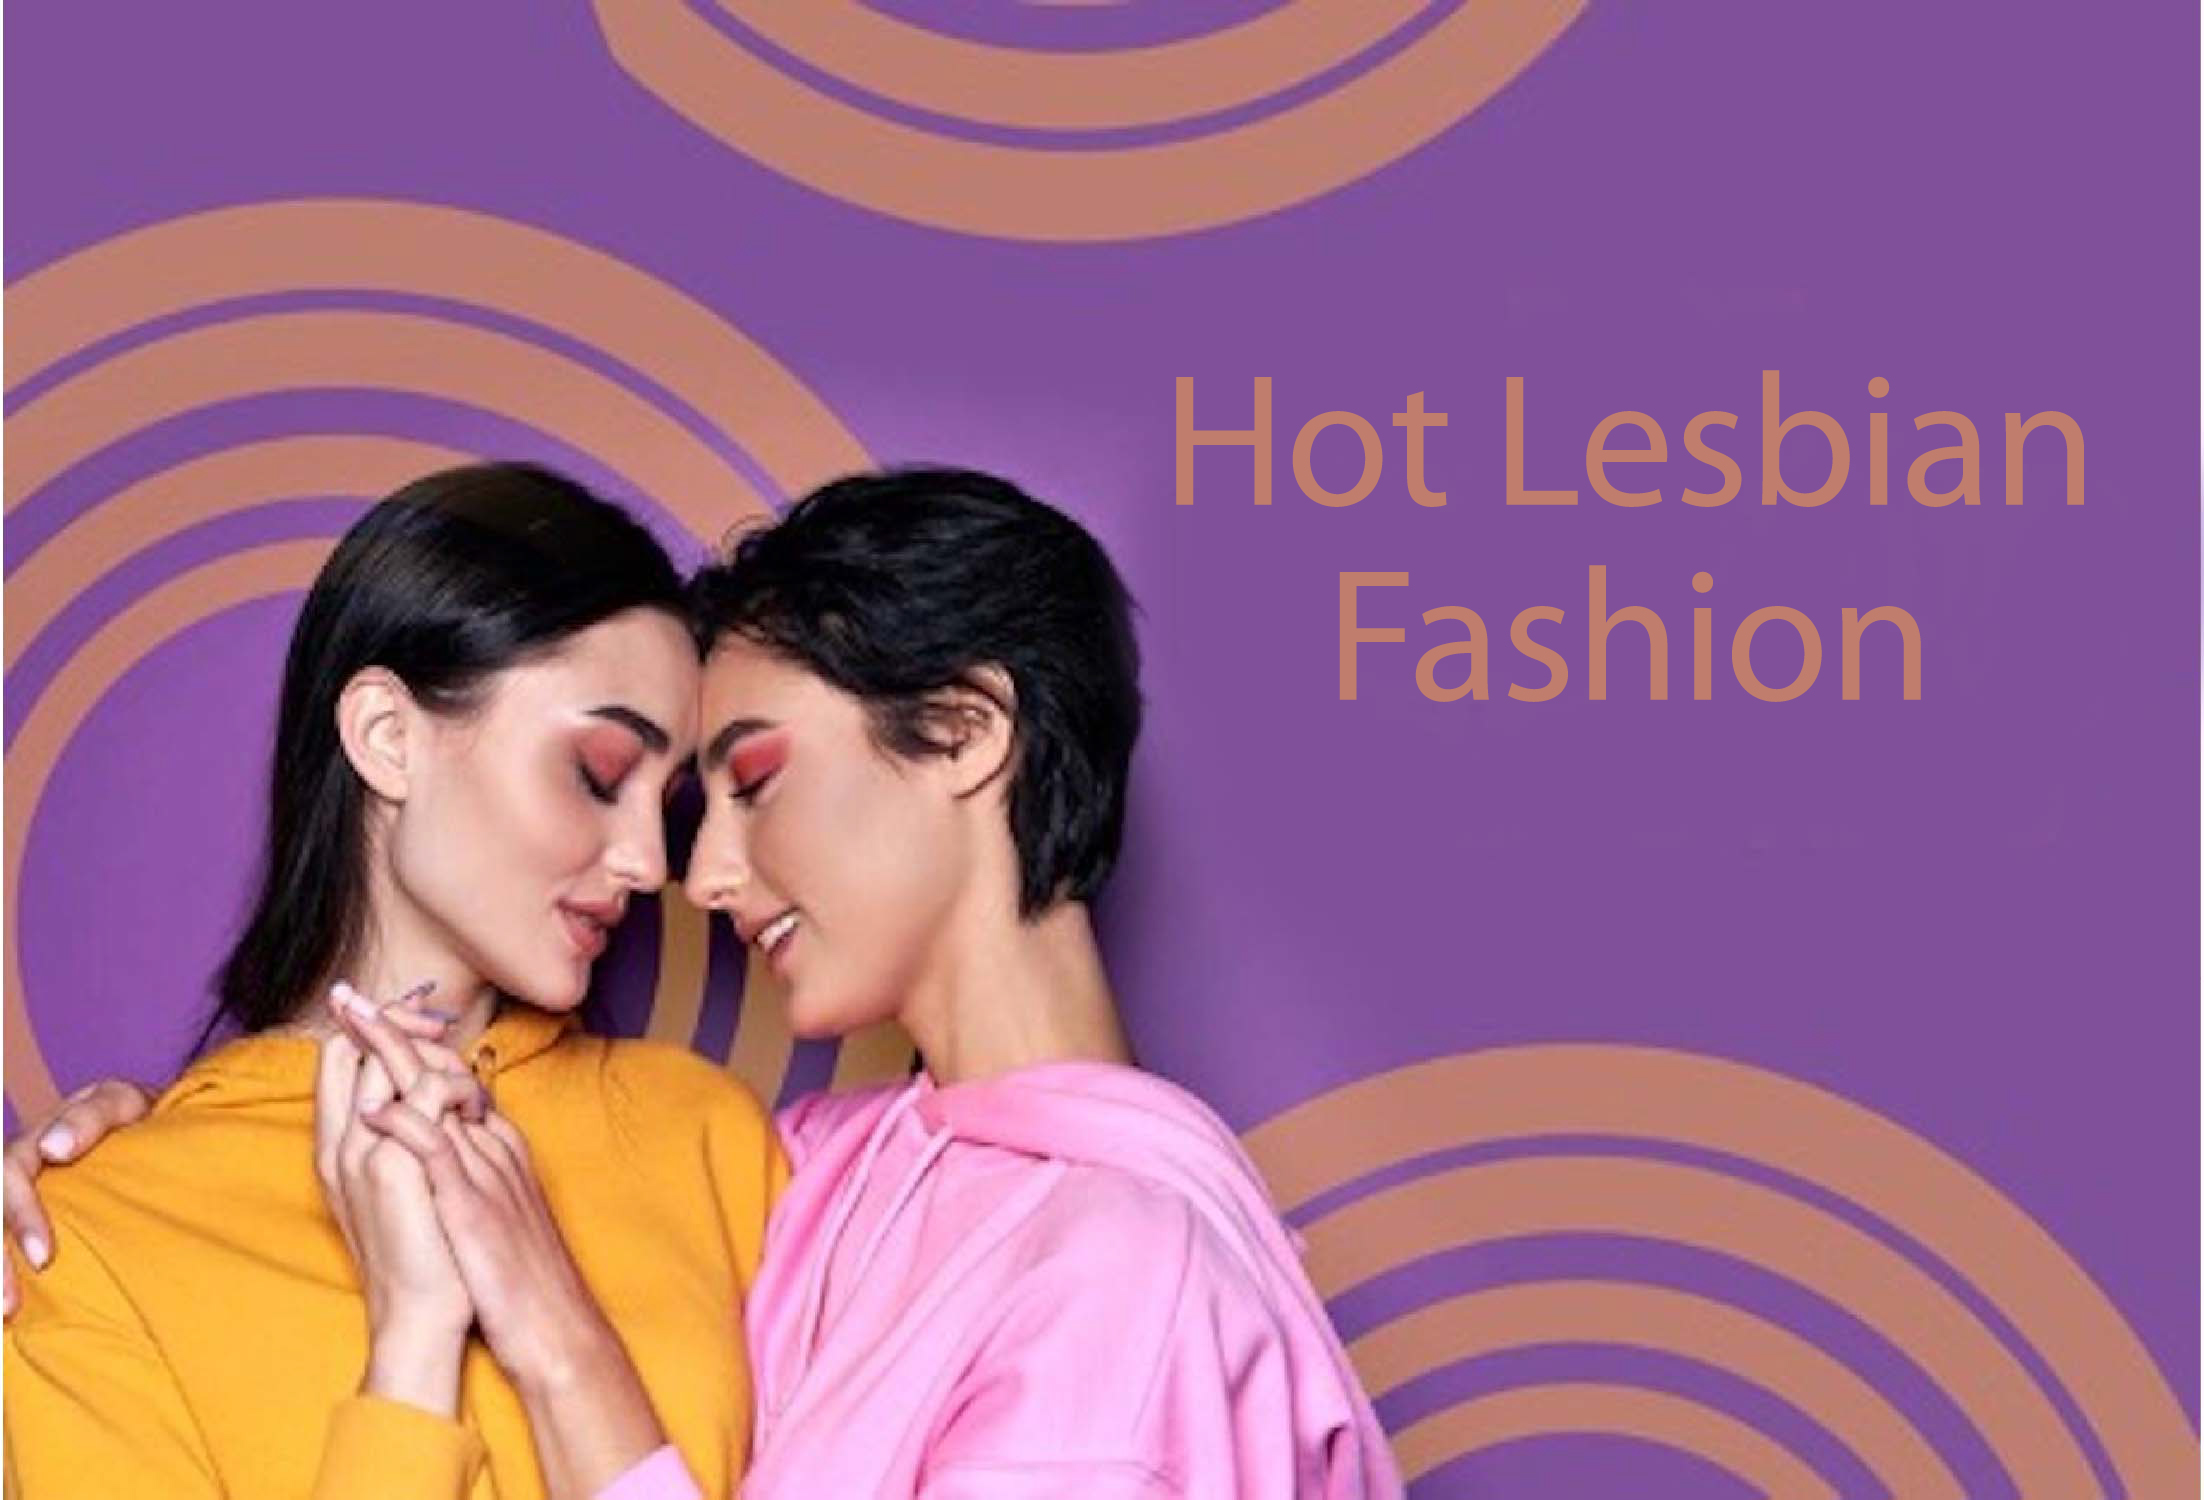 Hot Lesbian Fashion Tips